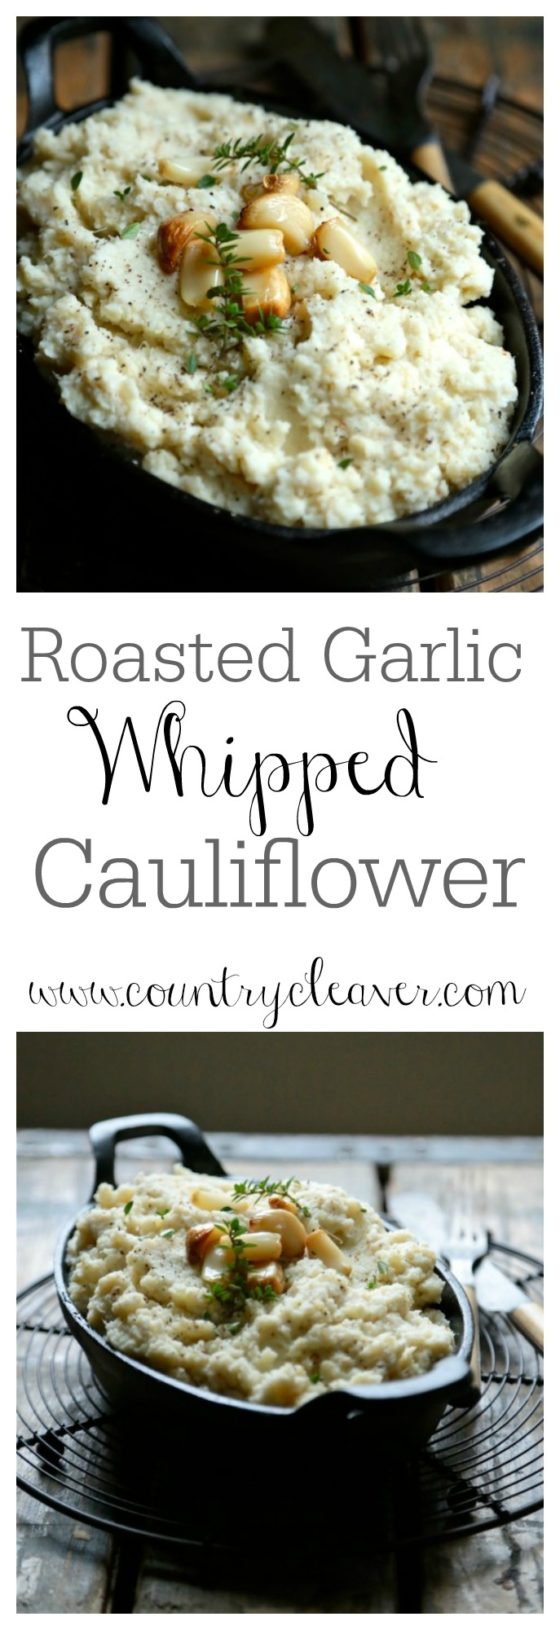 Roasted Garlic Whipped Cauliflower - www.countrycleaver.com